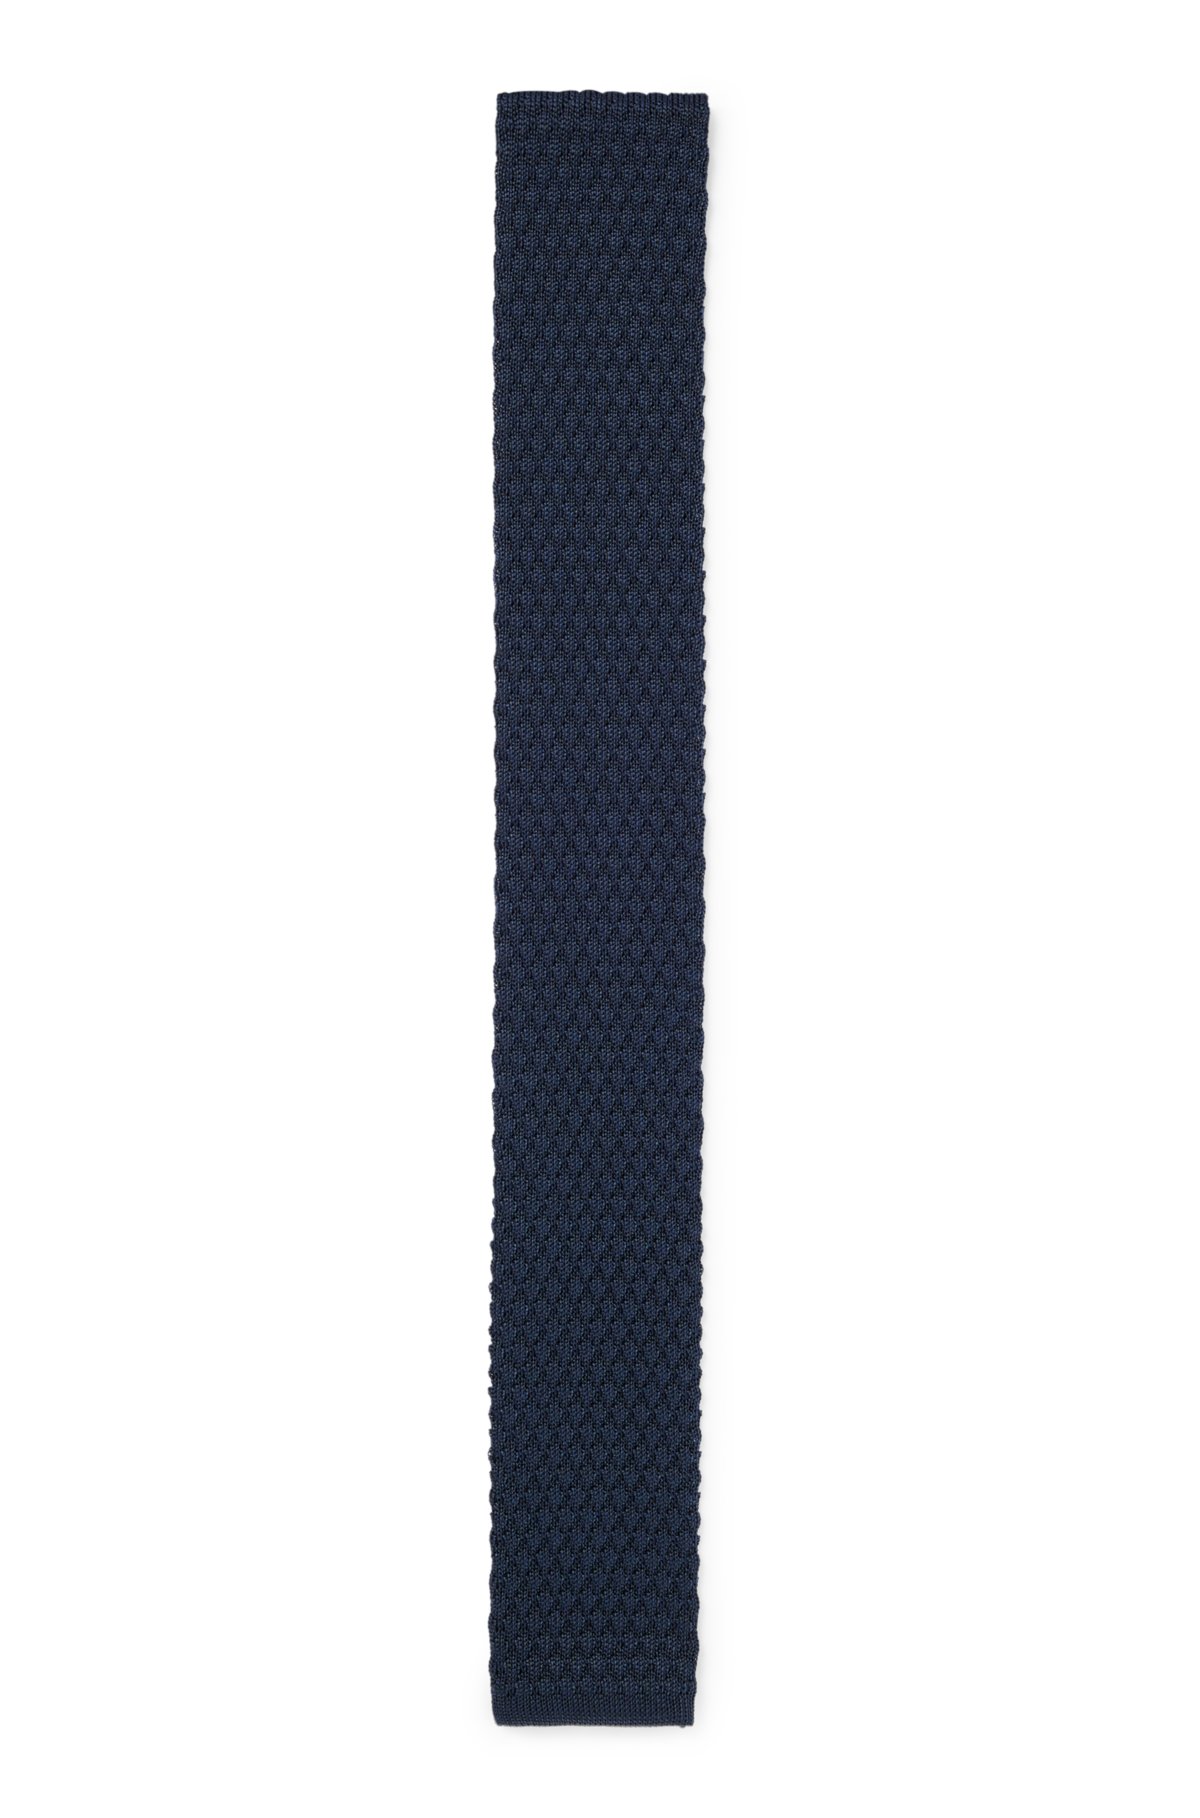 BOSS - Krawatte aus Seide mit Jacquard-Struktur reiner